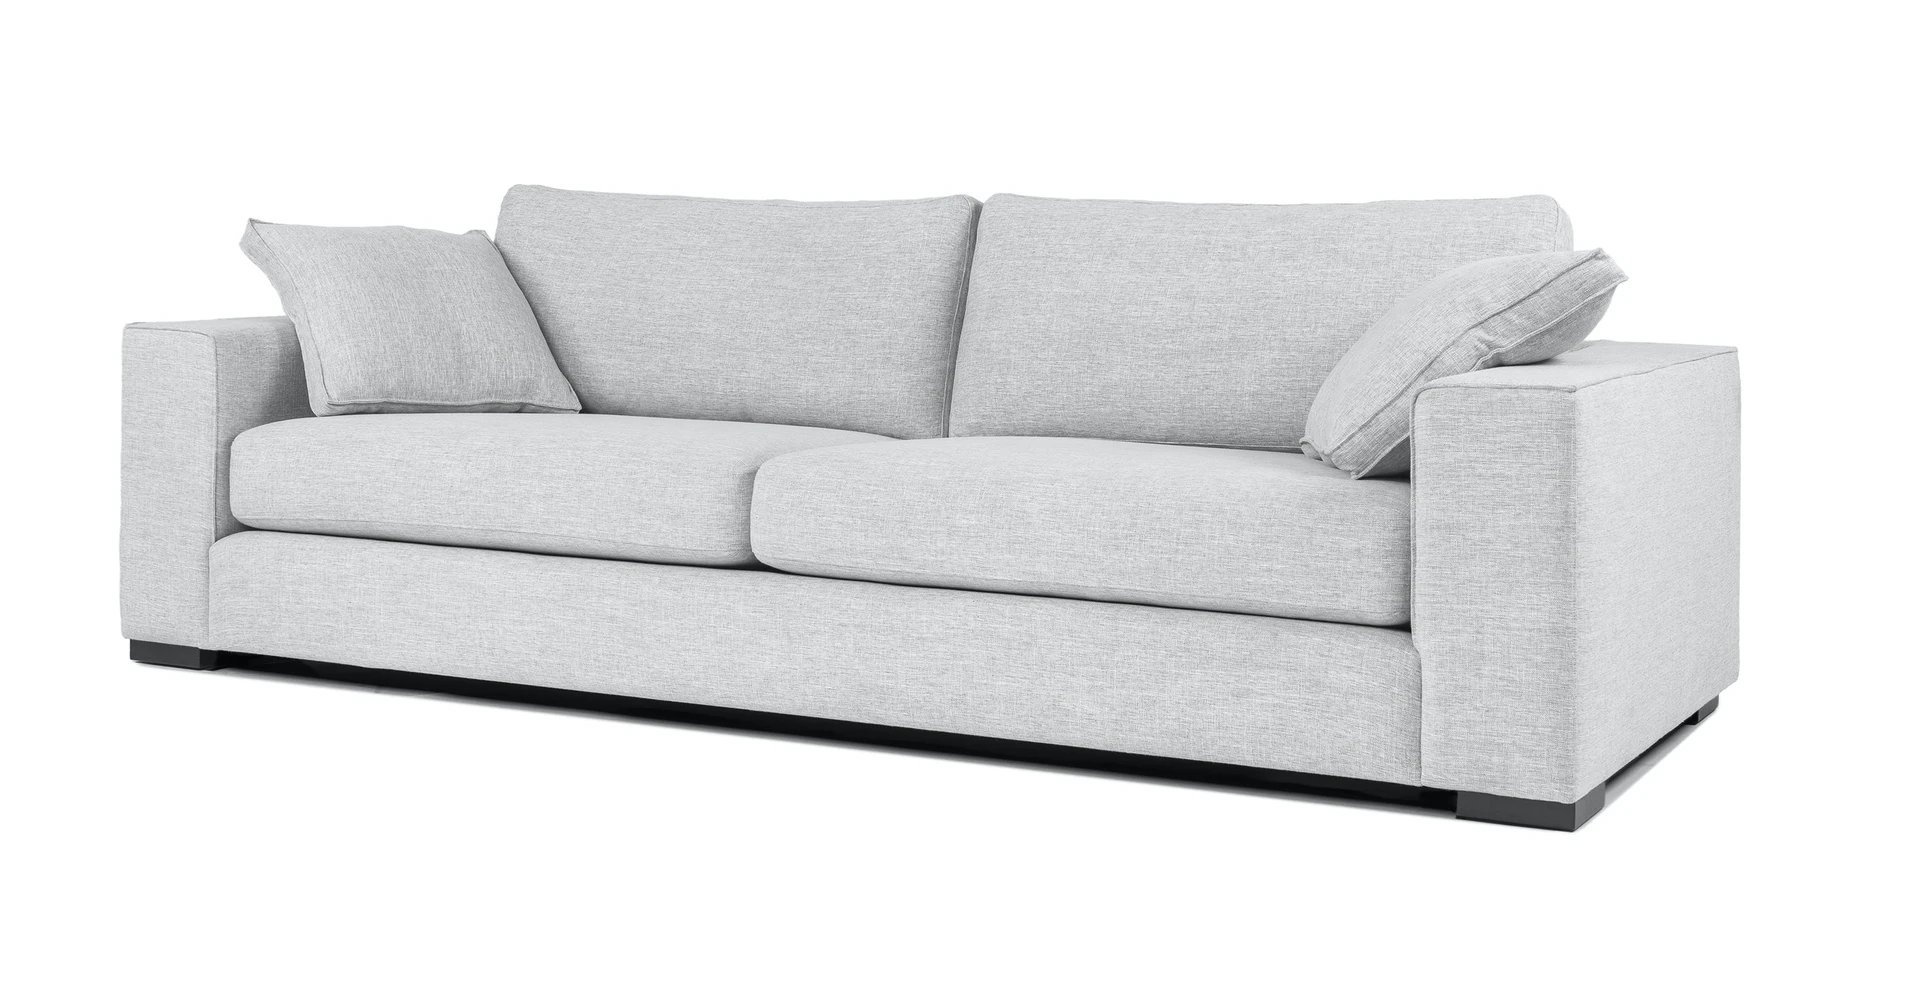 Sitka Mist Gray Sofa - Image 2